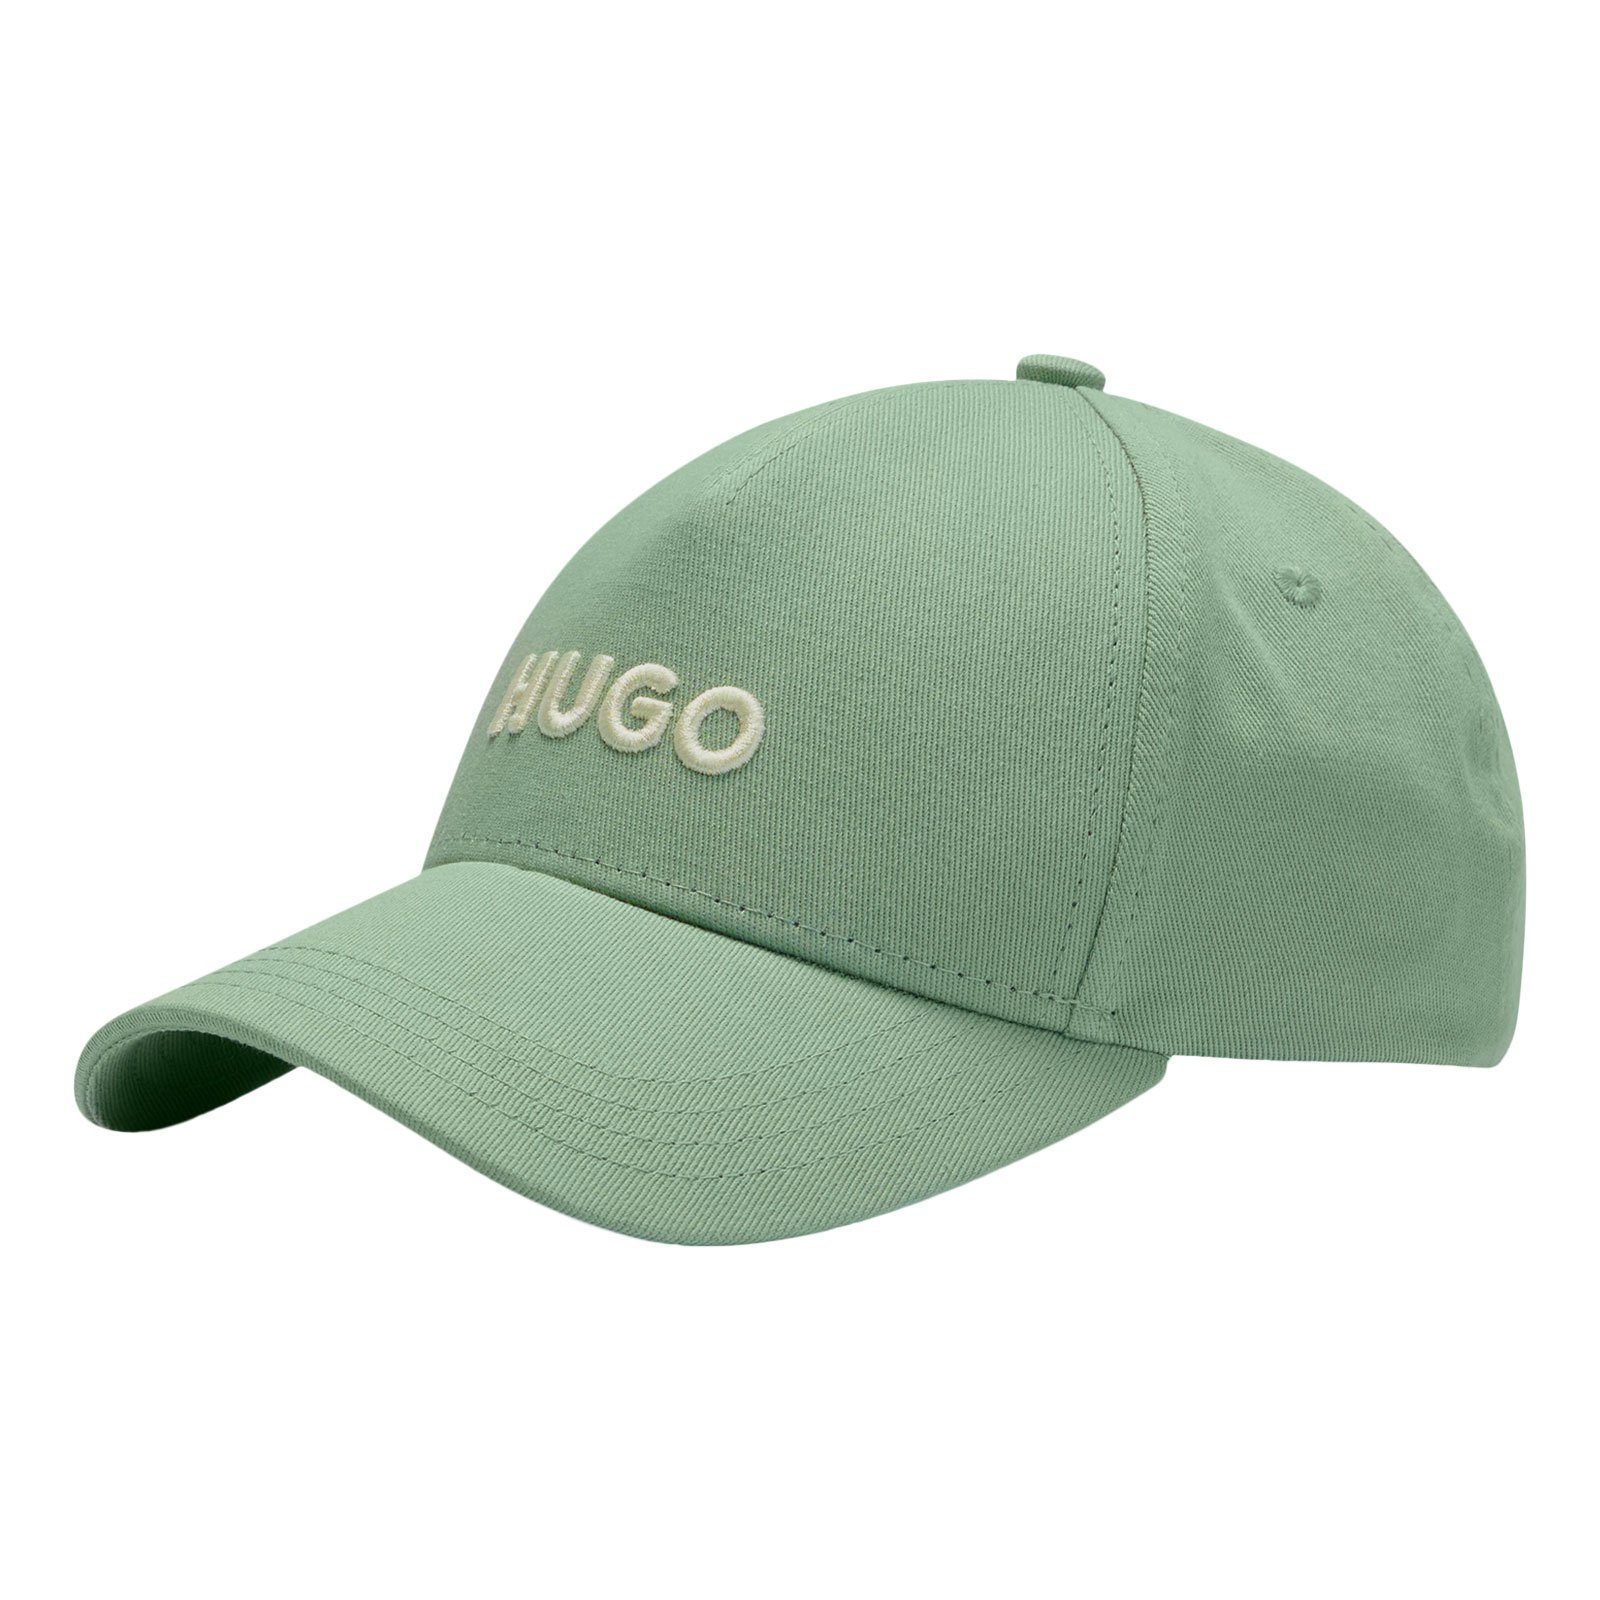 Markenlogo gesticktem Basecap mit pastel Snapback 330 Cap light green HUGO